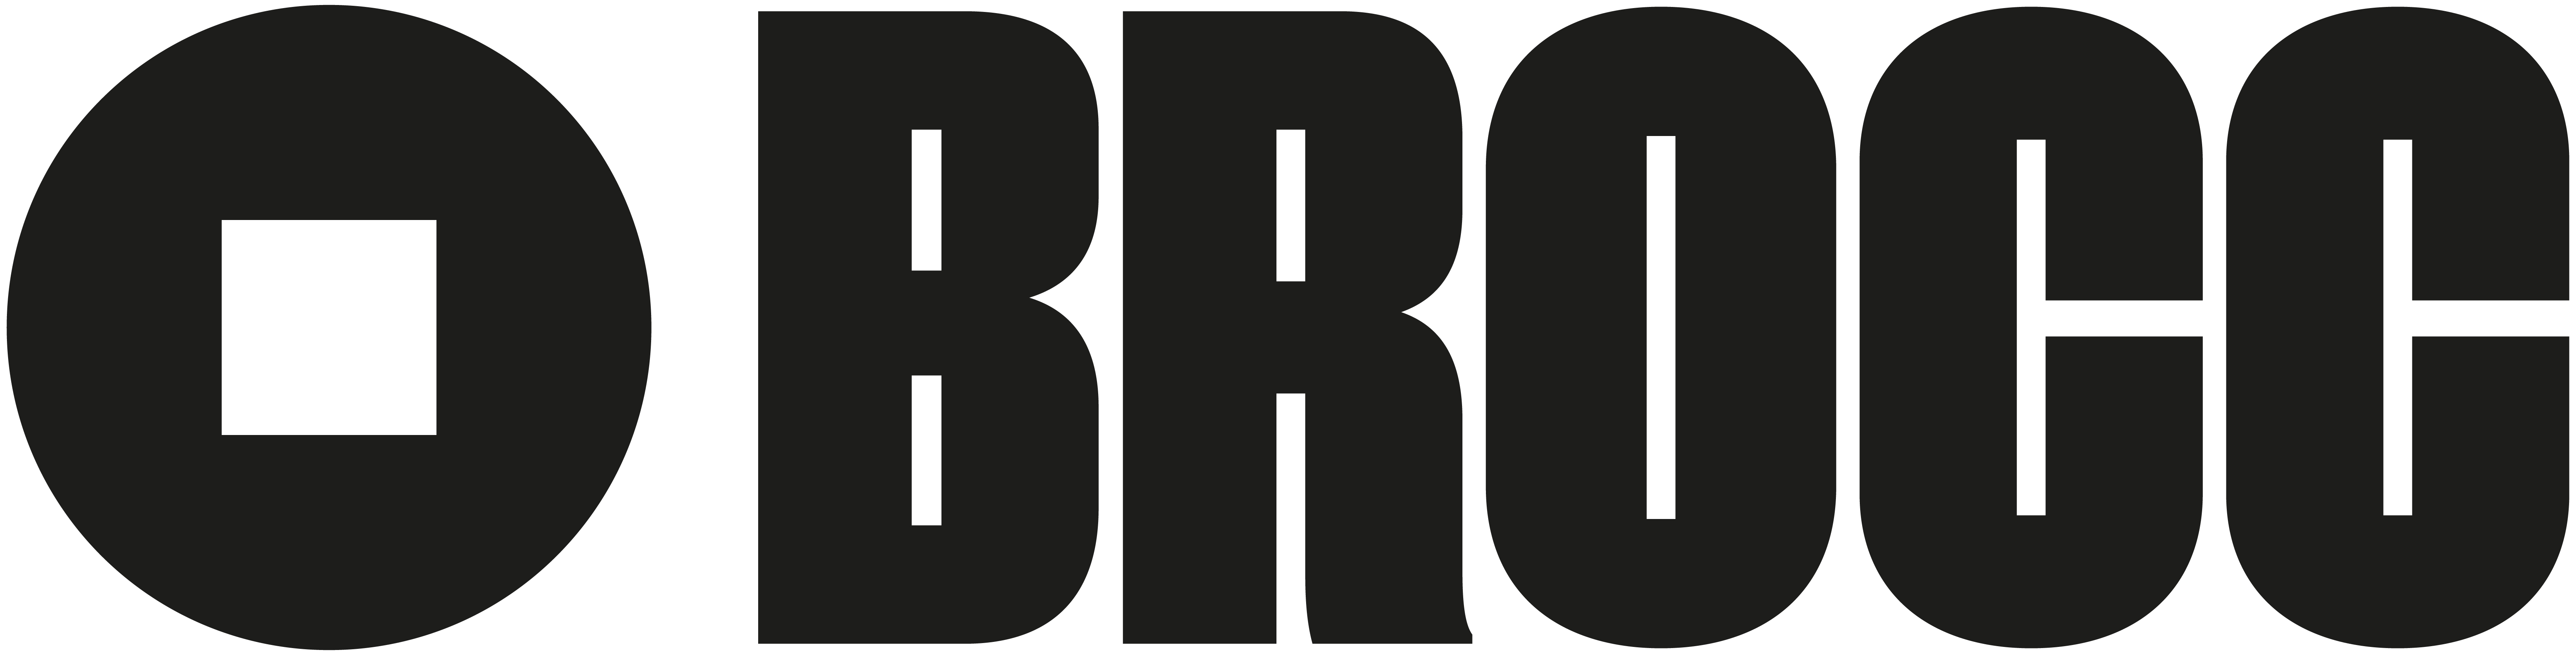 Brocc logo